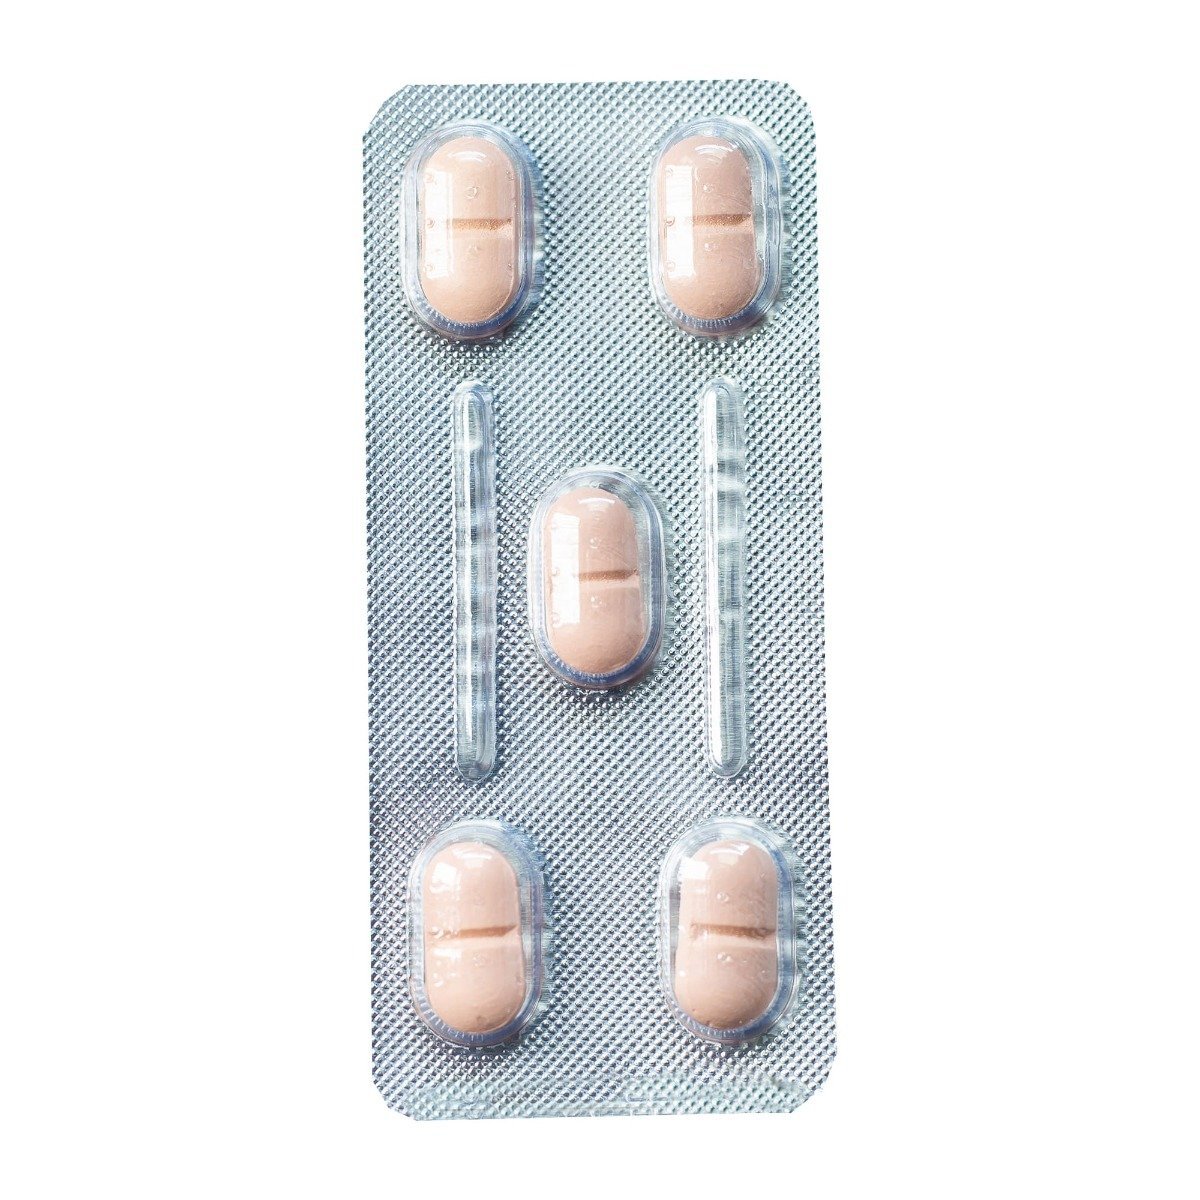 Tavacin 500 mg - 5 Tablets - Bloom Pharmacy